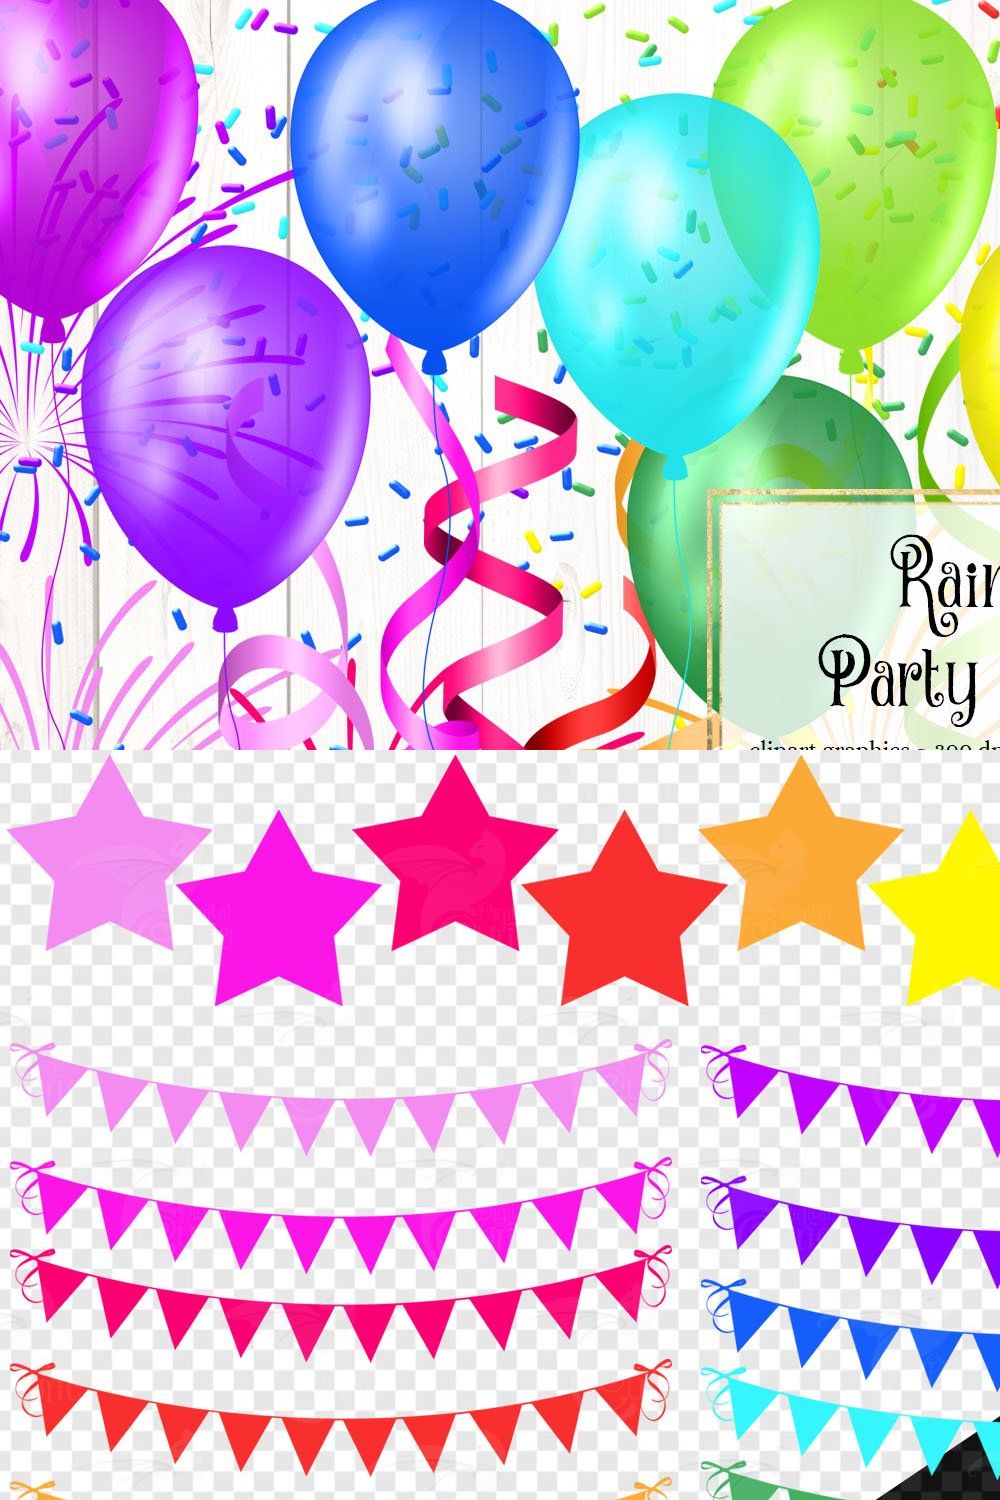 Rainbow Party Clip Art pinterest preview image.